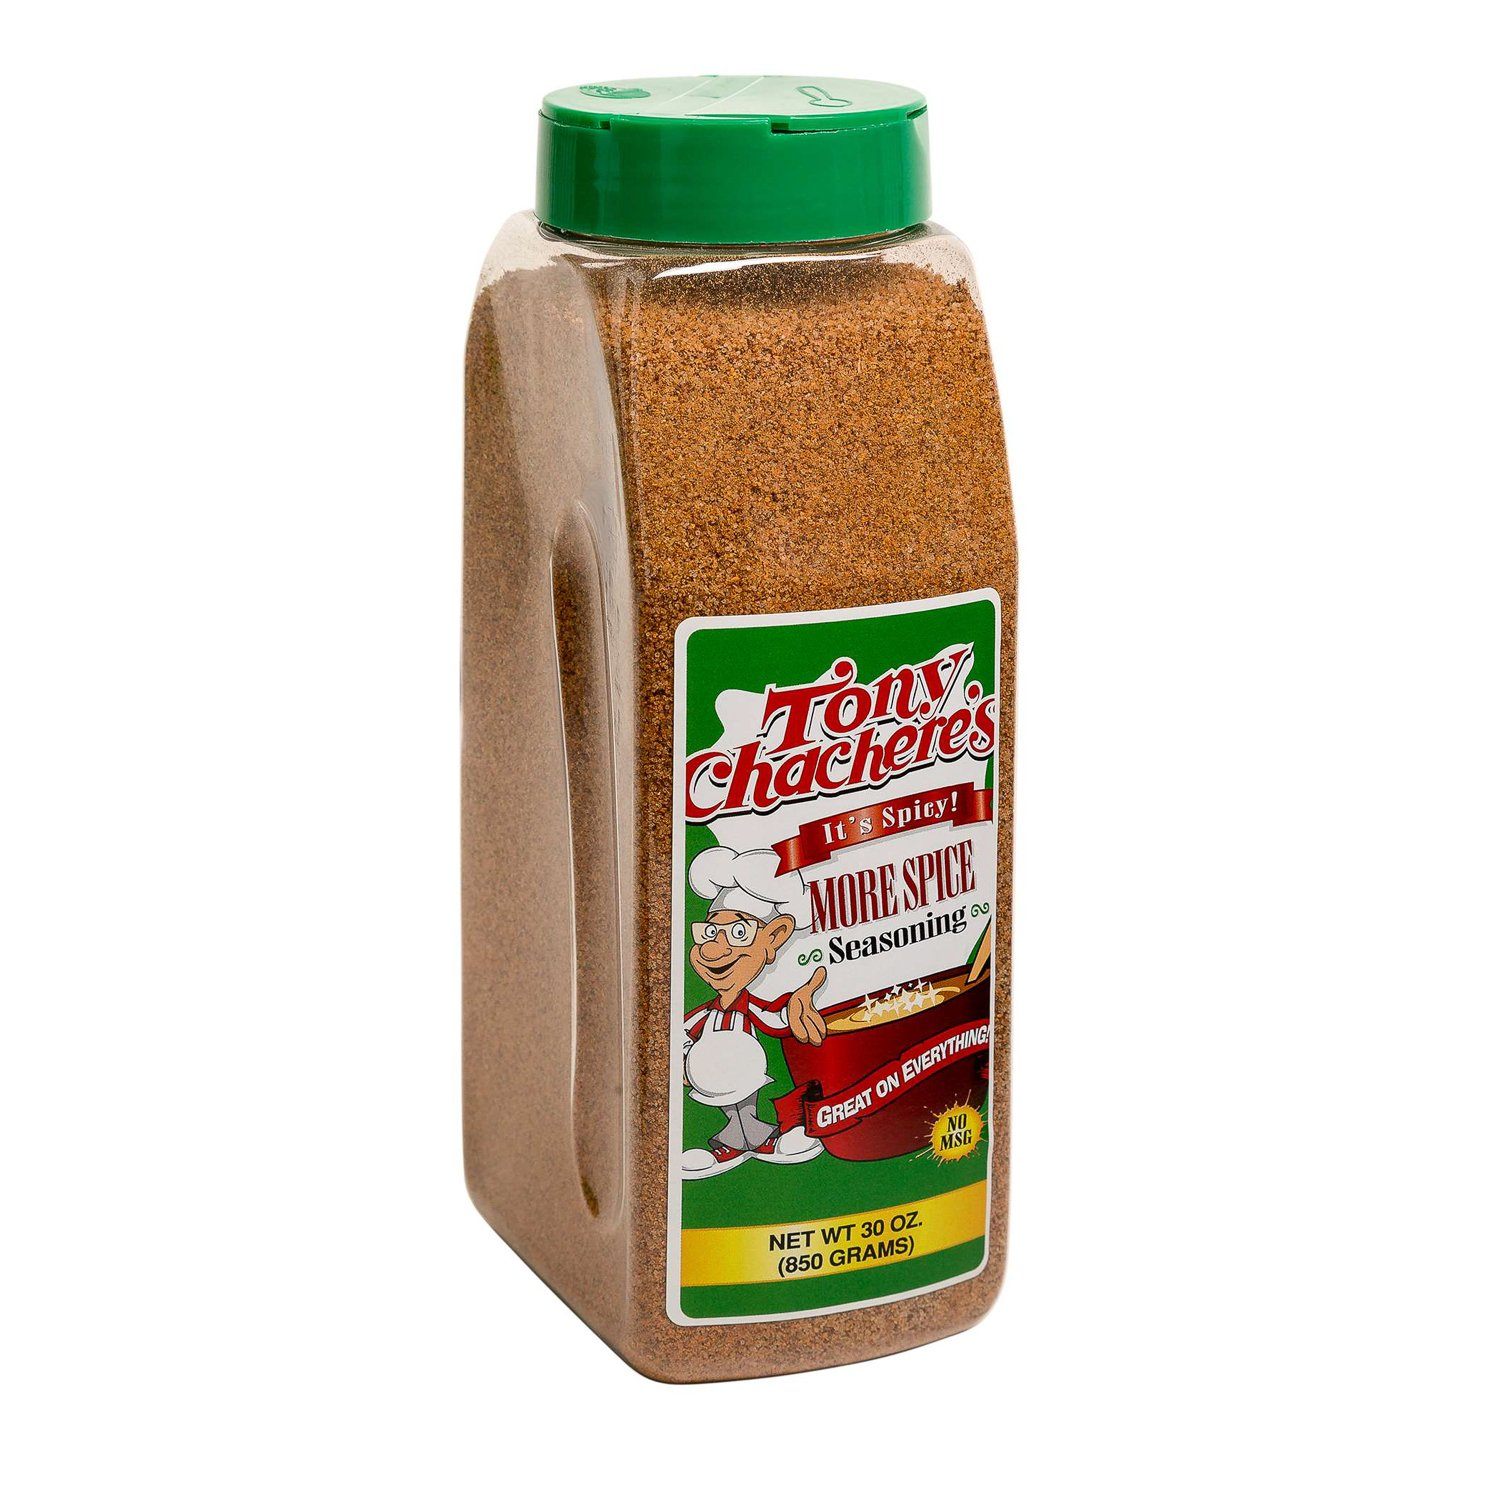 Tony Chachere's No Salt Creole Seasoning 5 oz - Pack of 4 - 384922266370